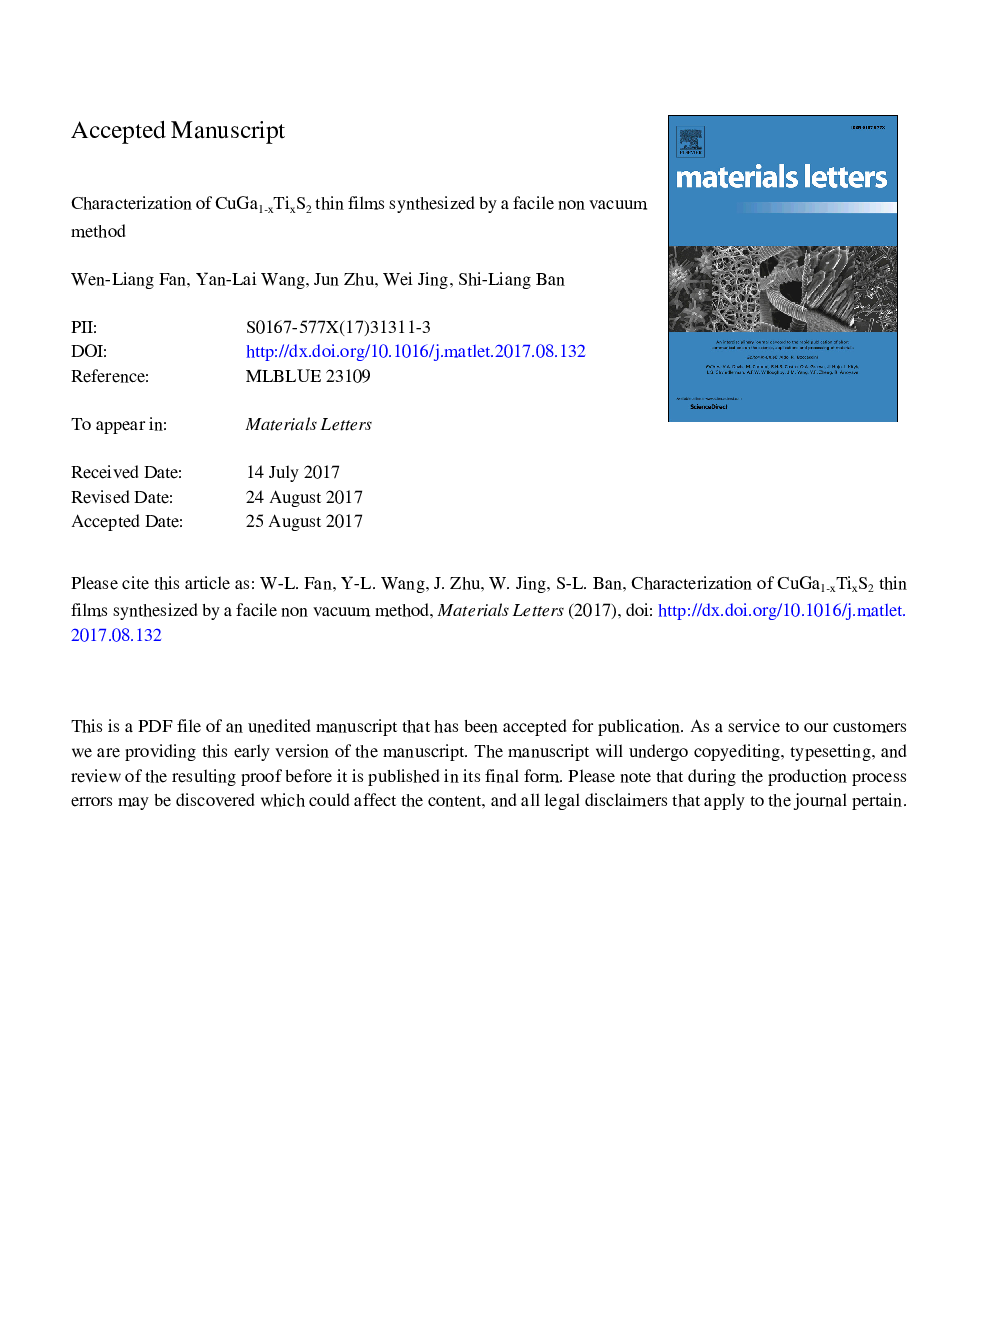 Characterization of CuGa1âxTixS2 thin films synthesized by a facile non vacuum method